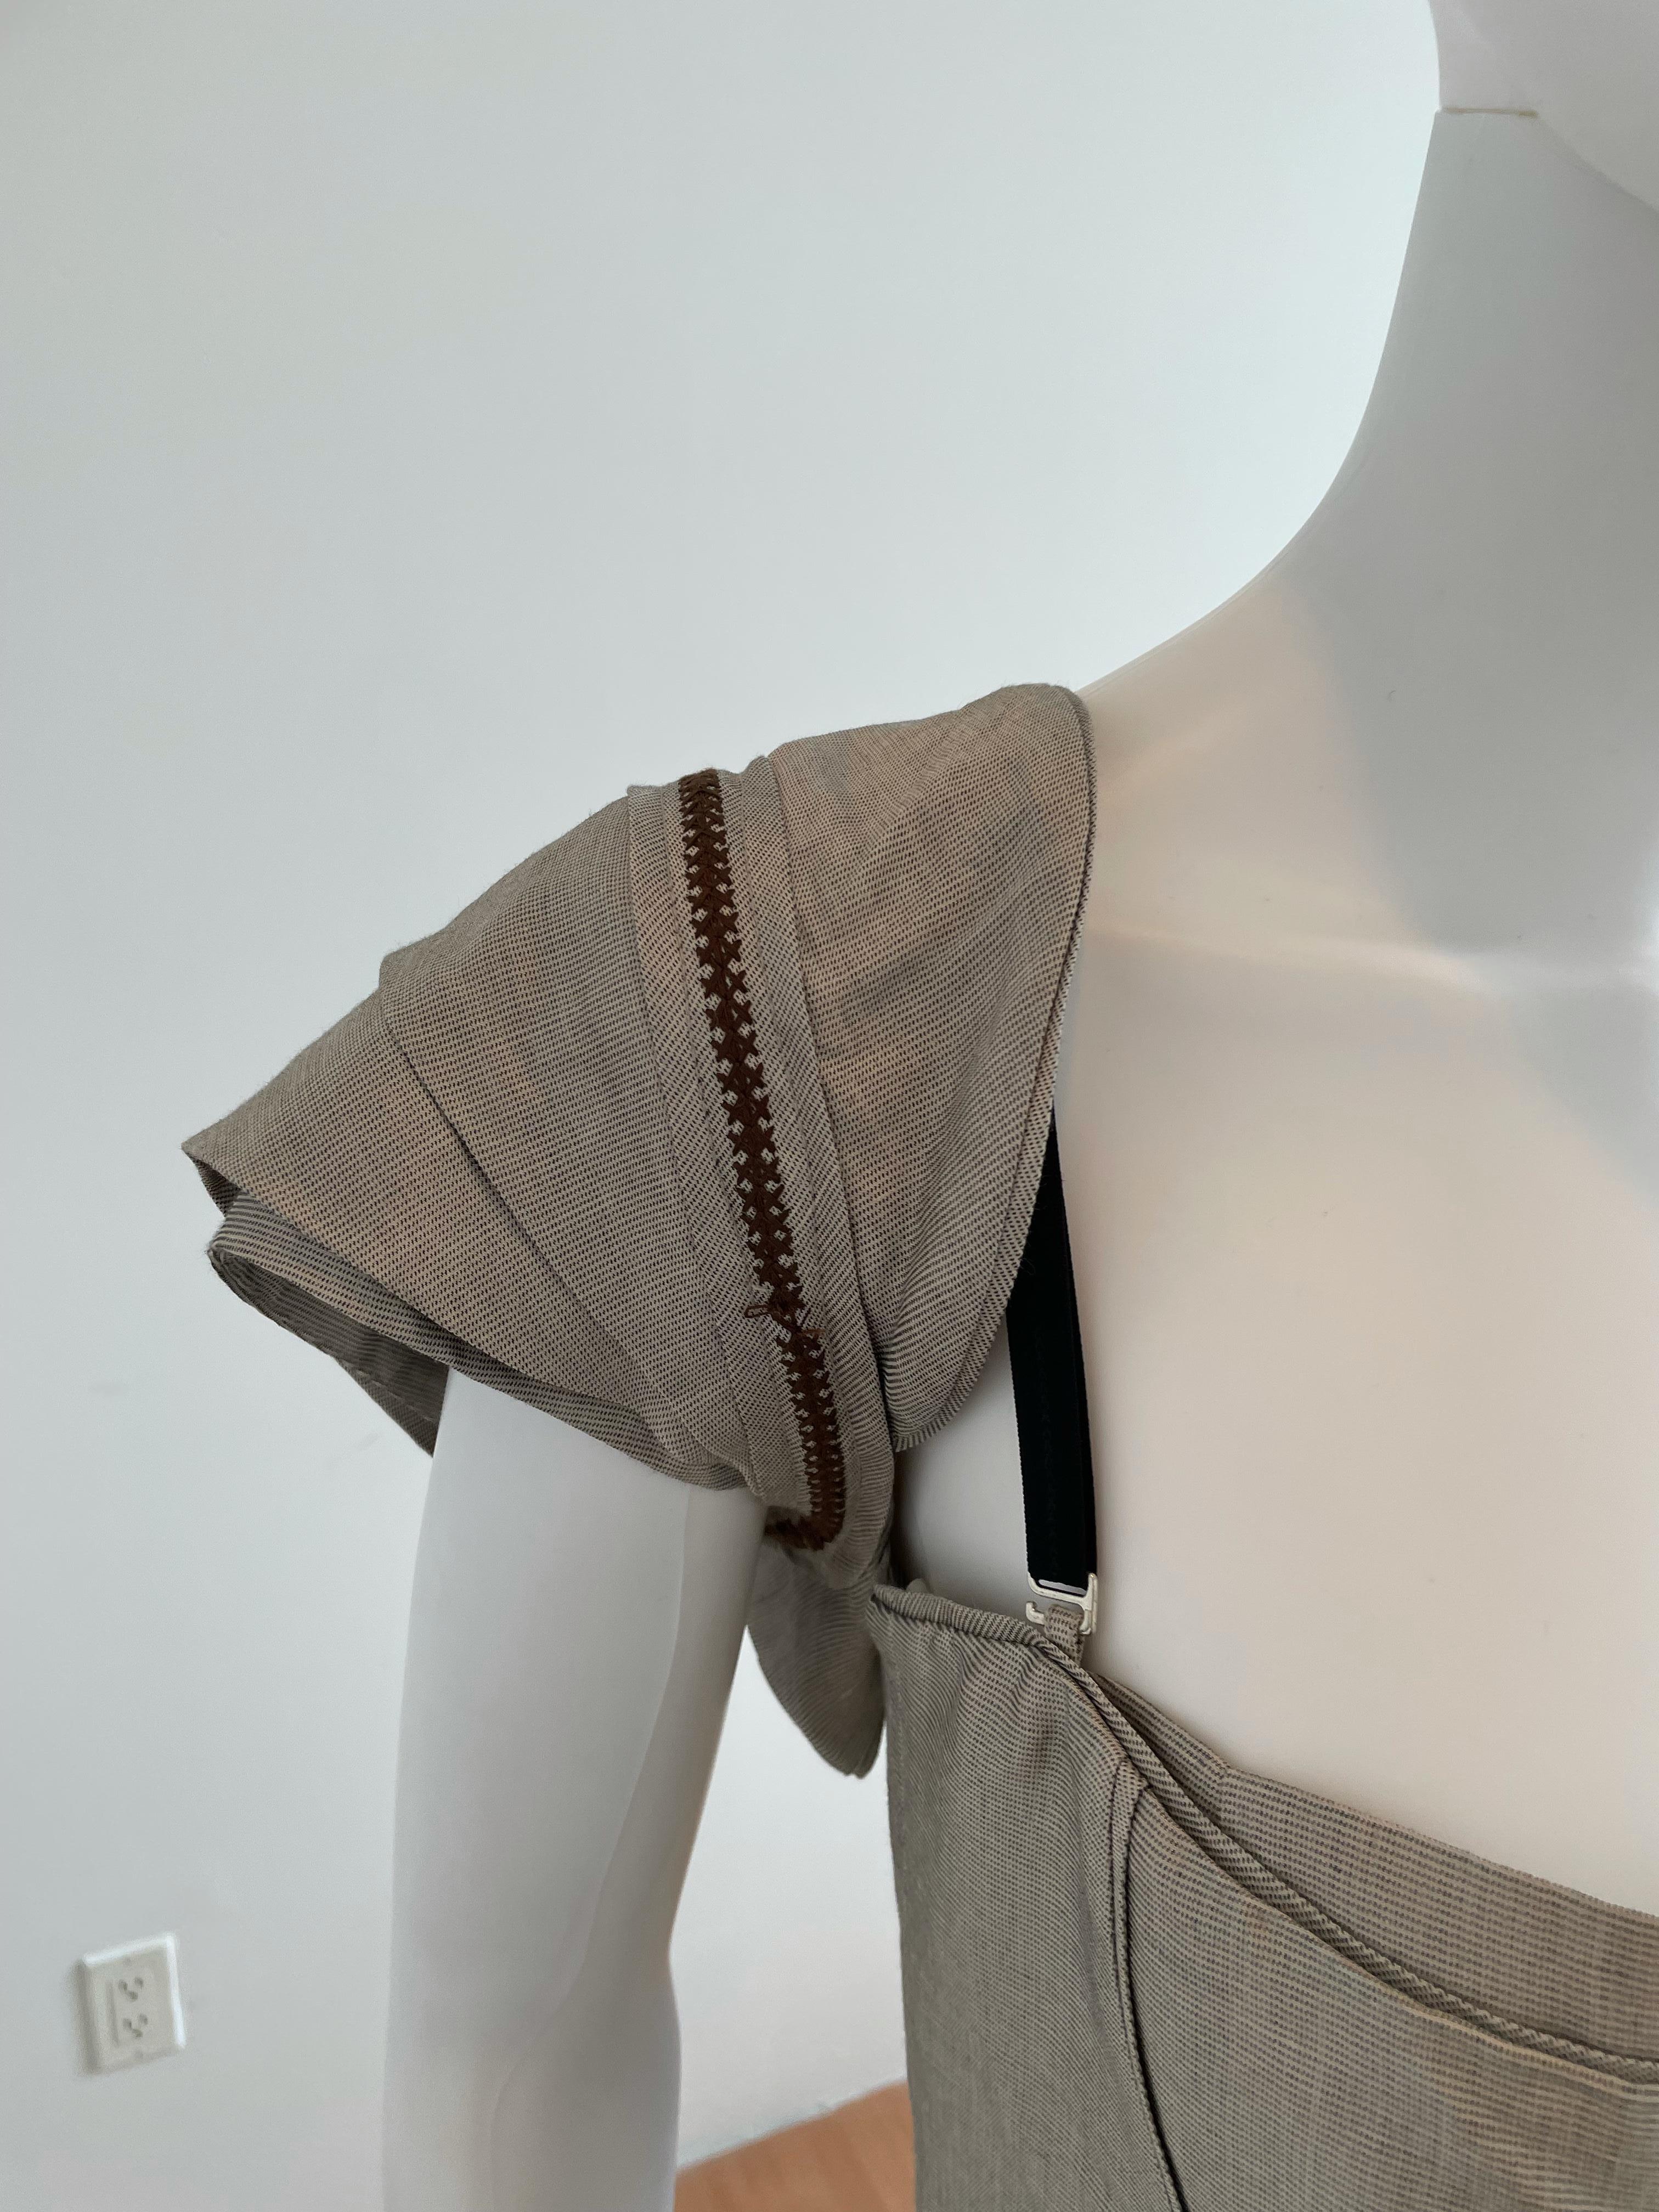 Antonio Berardi Structured Dress with Matching Caplet For Sale 6